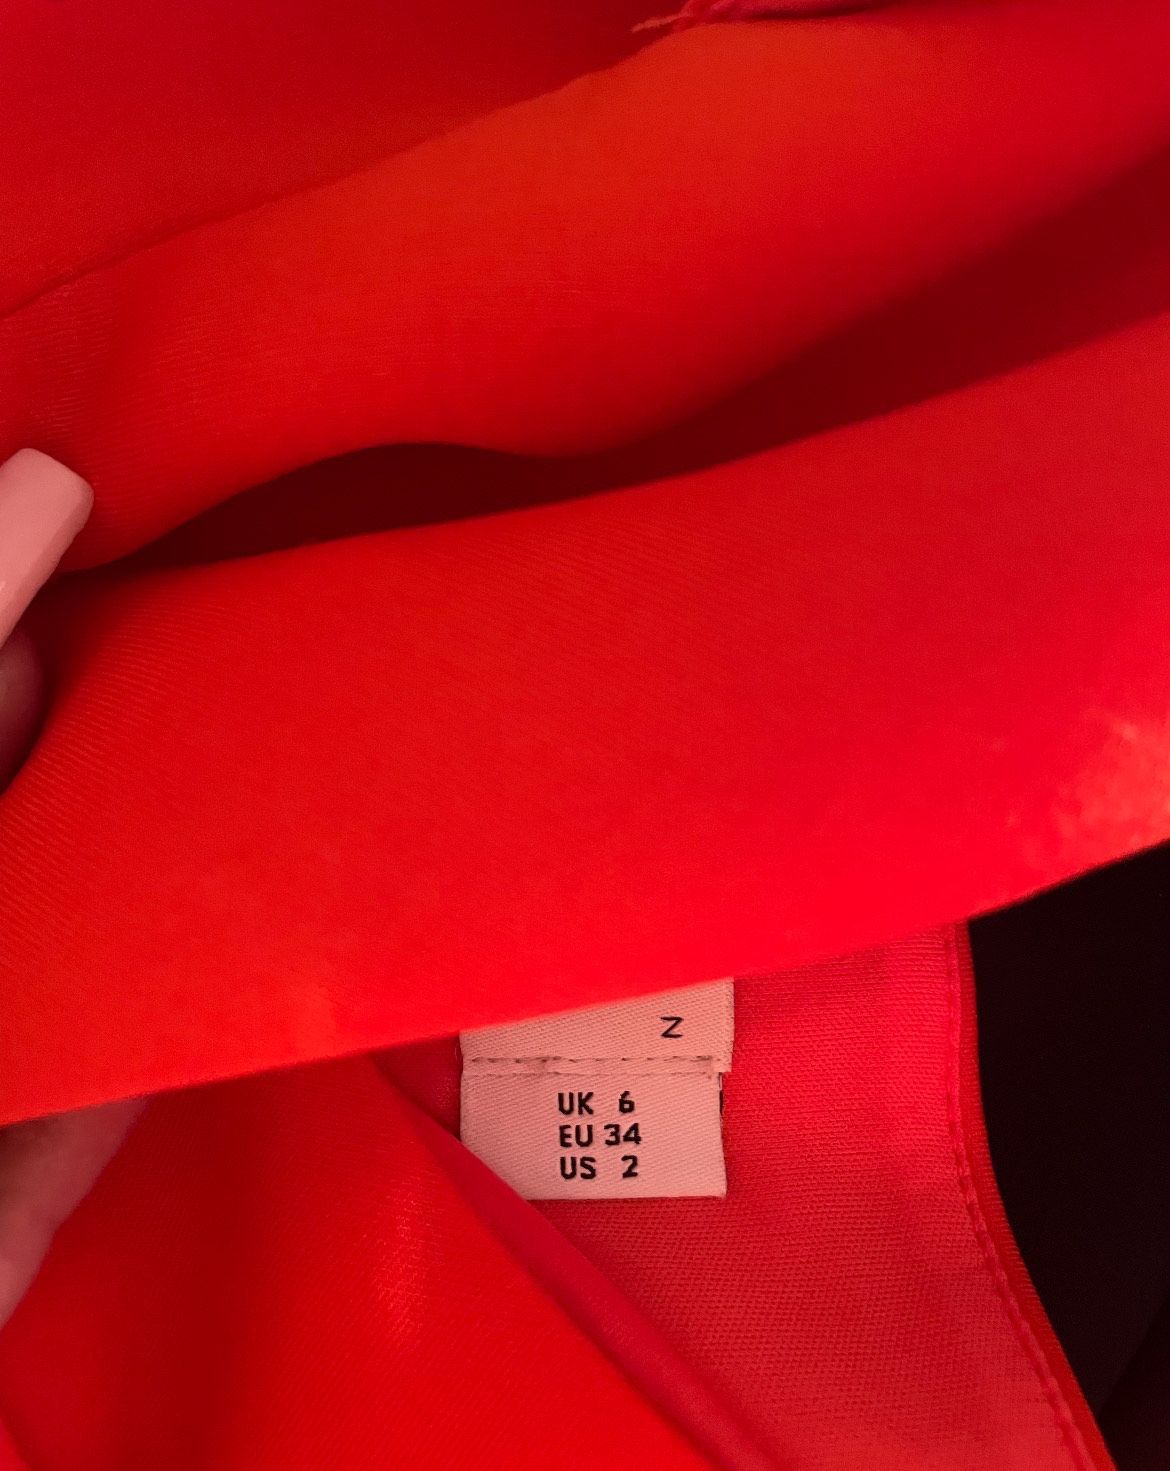 Size 2 Prom Cap Sleeve Orange Floor Length Maxi on Queenly